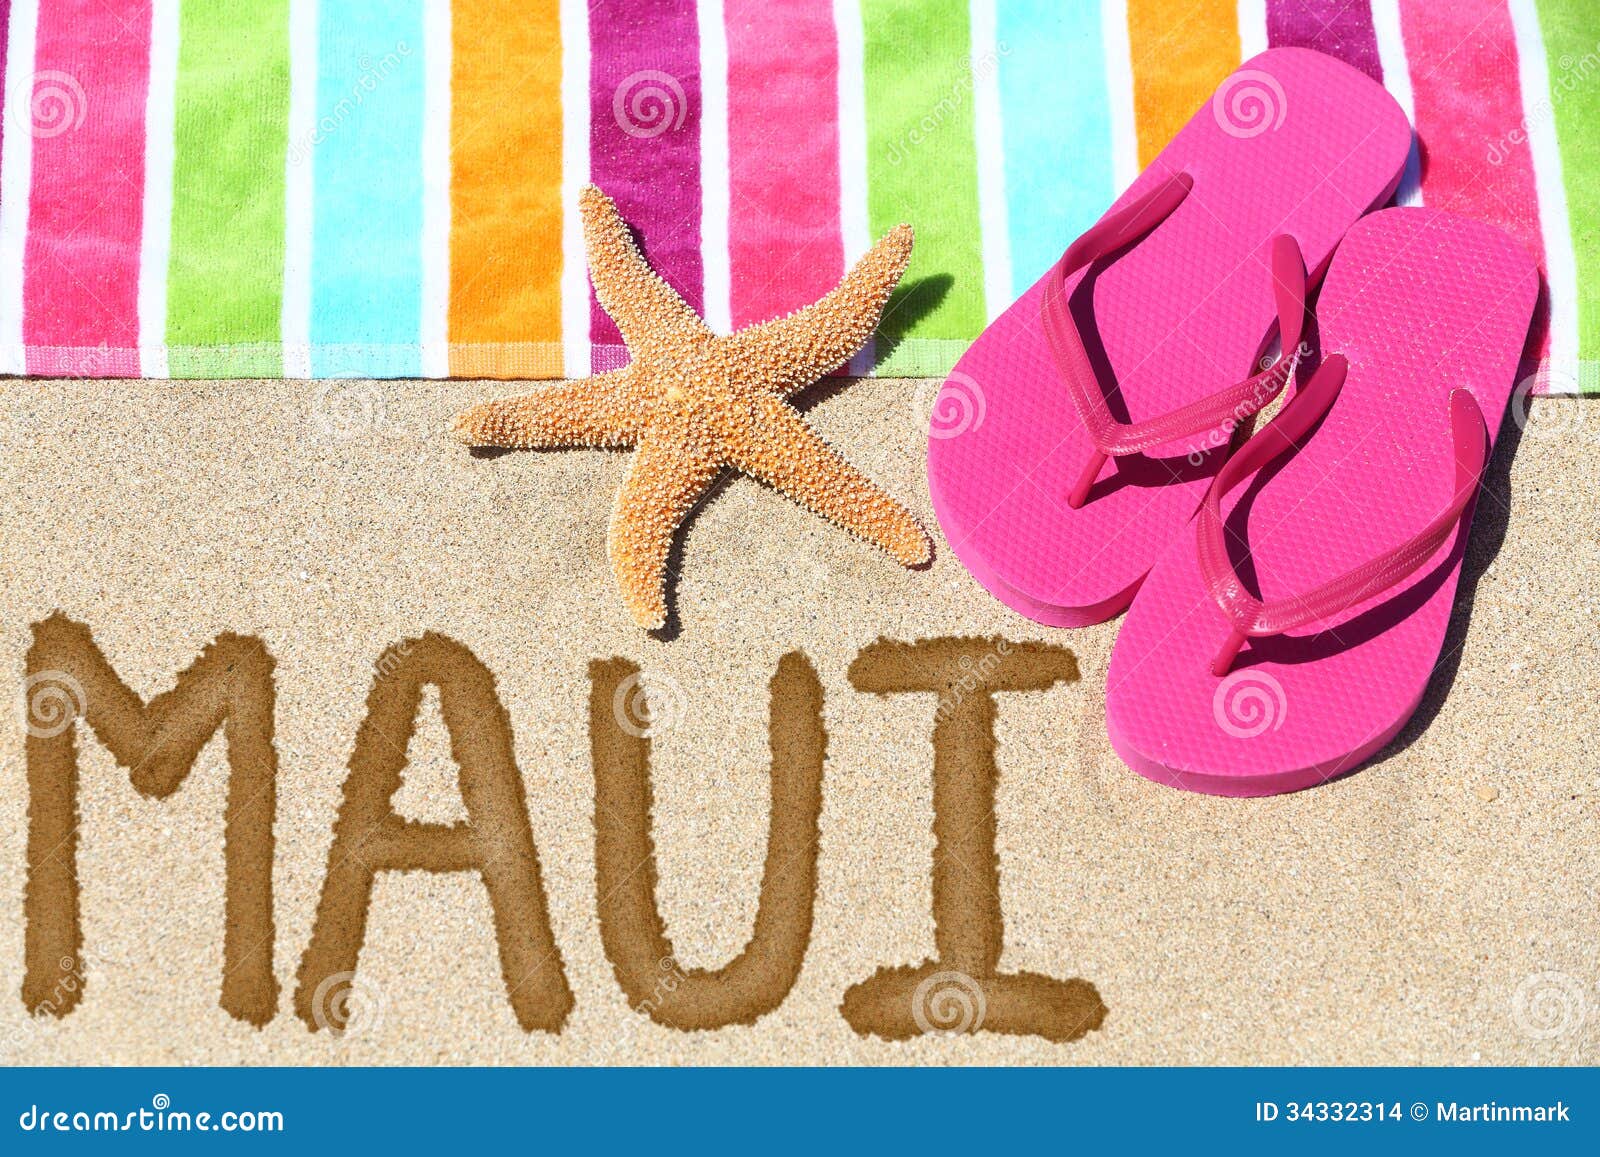 Maui, Hawaii Beach Travel Stock Images - Image: 34332314